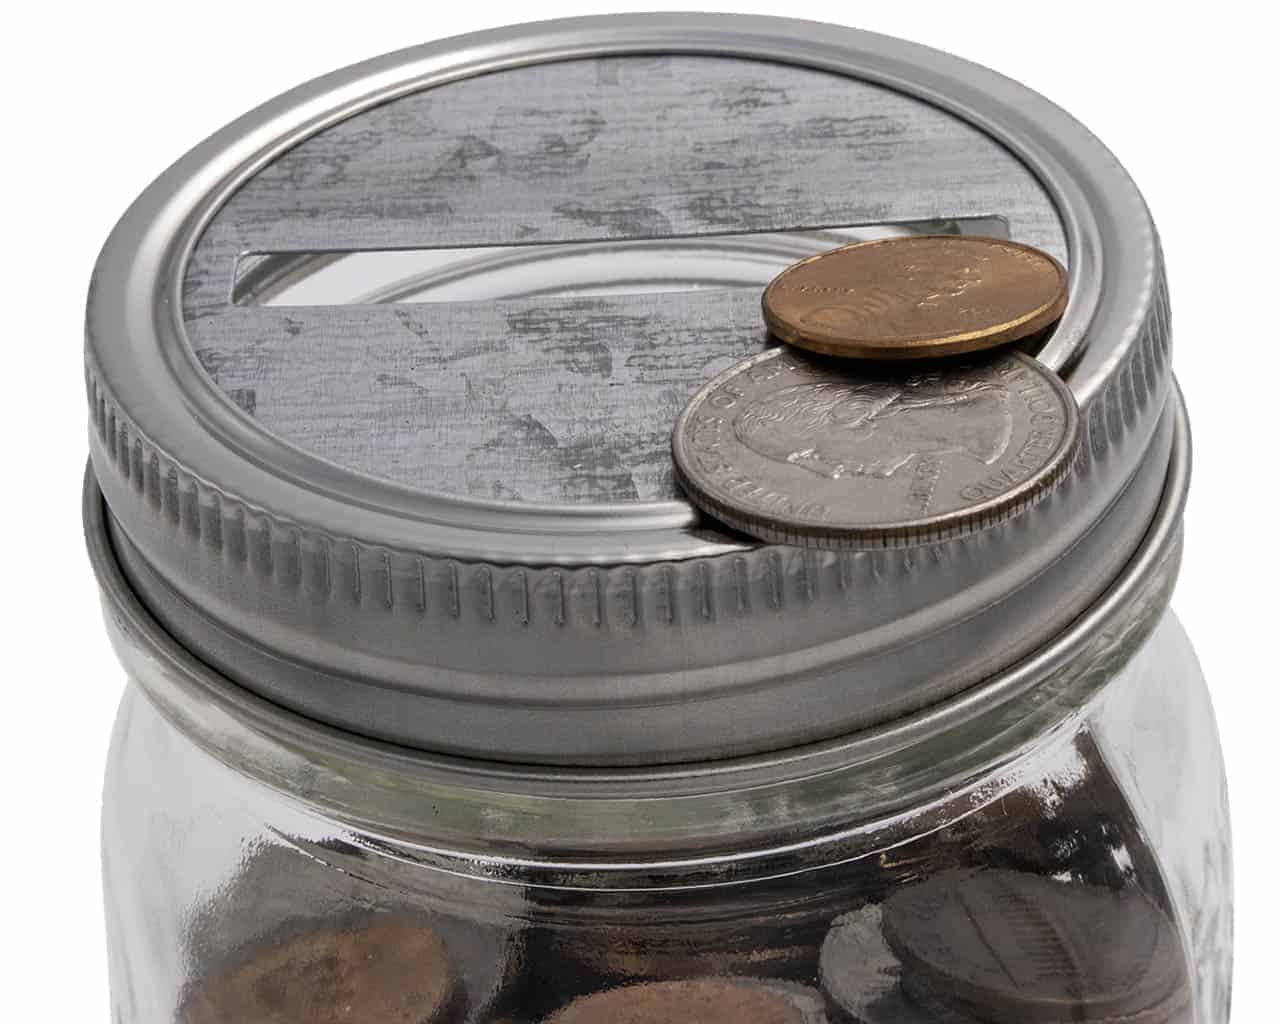 mason-jar-lifestyle-galvanized-coin-slot-bank-lid-insert-stainless-steel-band-regular-mouth-ball-mason-jar-coins-closeup